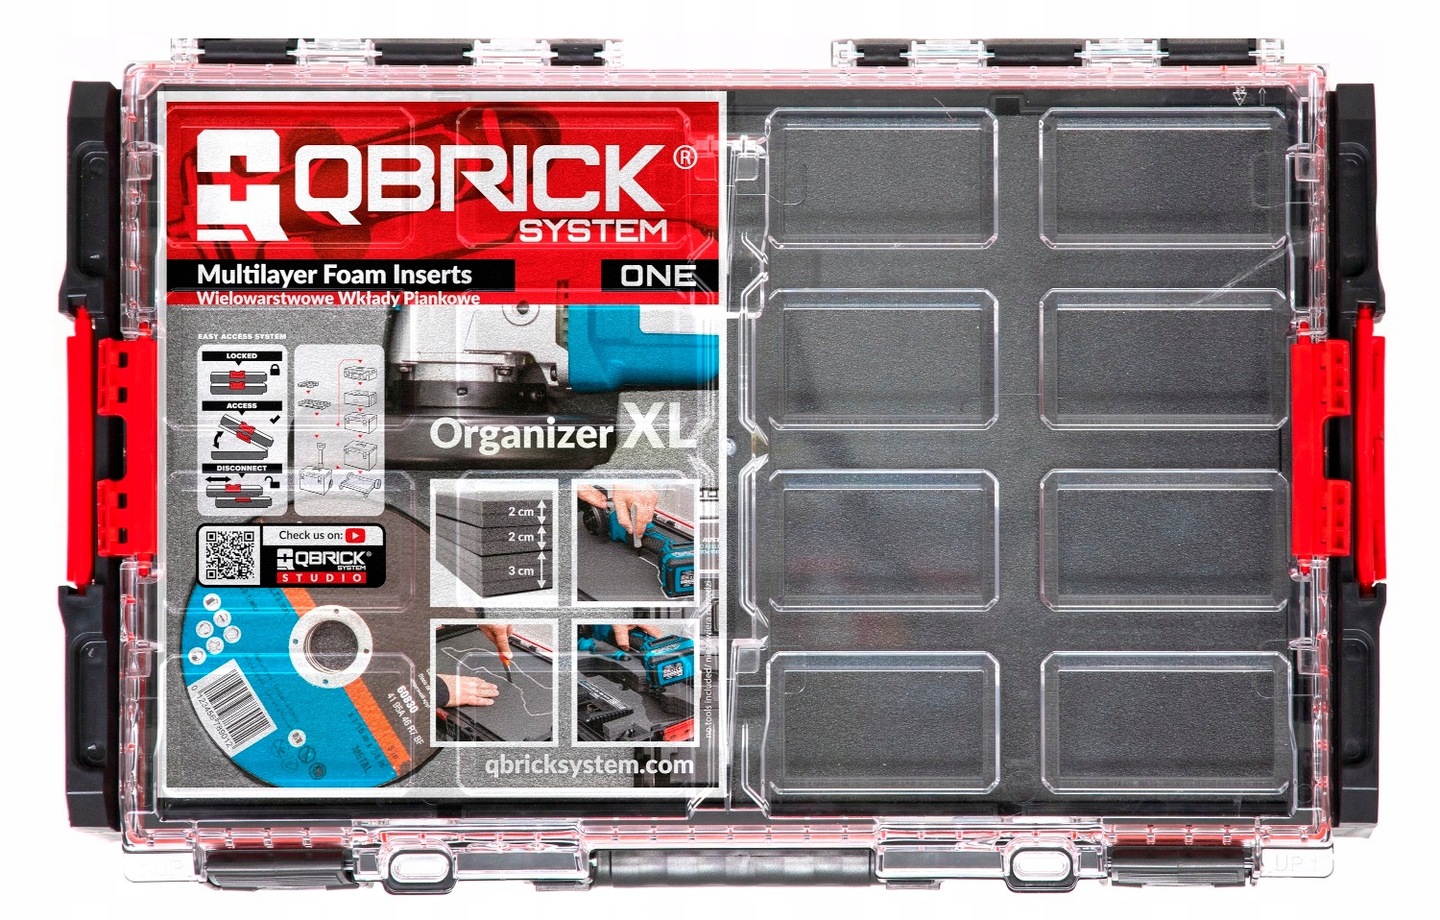 Органайзер для инструментов Qbrick System ONE Organizer XL MFI с мягкой вставкой органайзер для кухонных инструментов eva solo legio